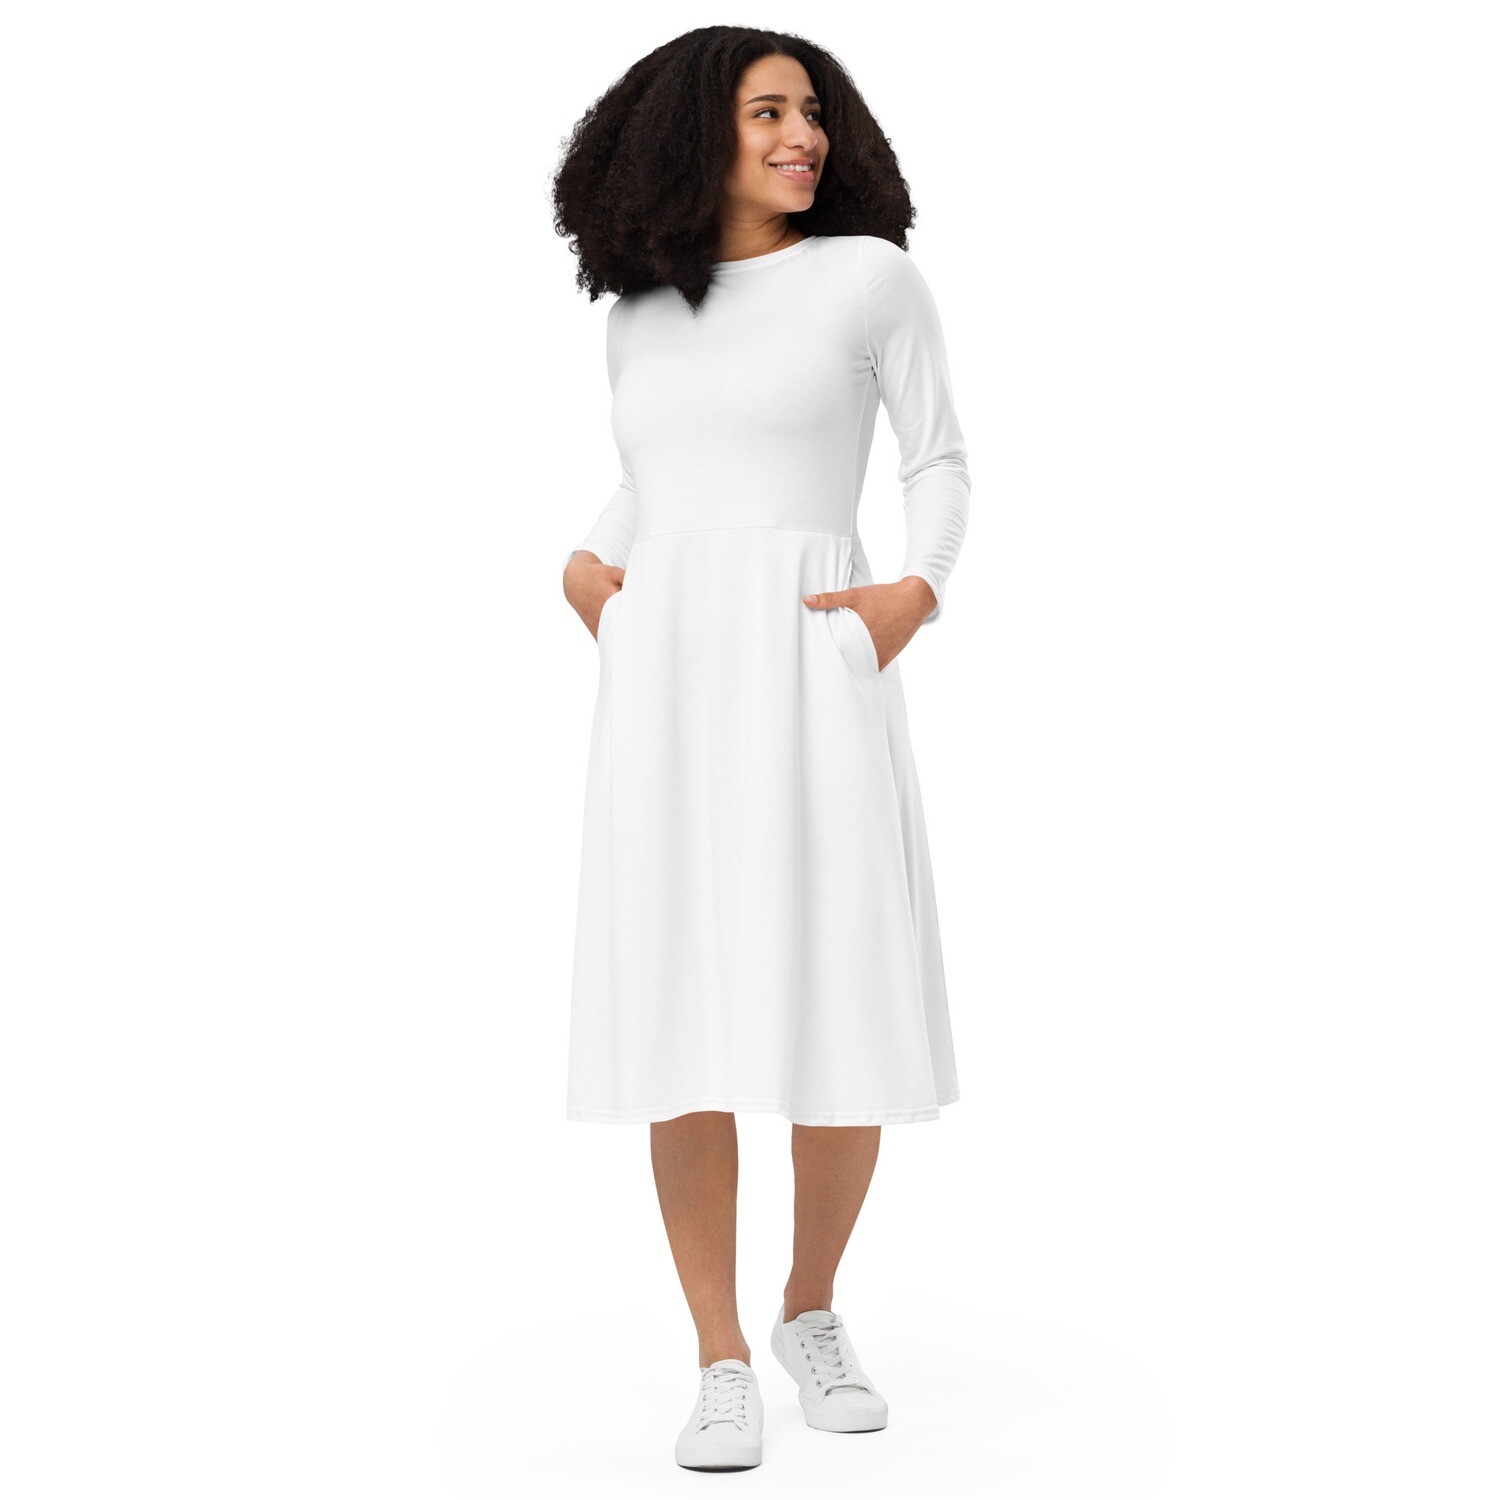 White long sleeve midi dress with pockets - City Hall wedding dress